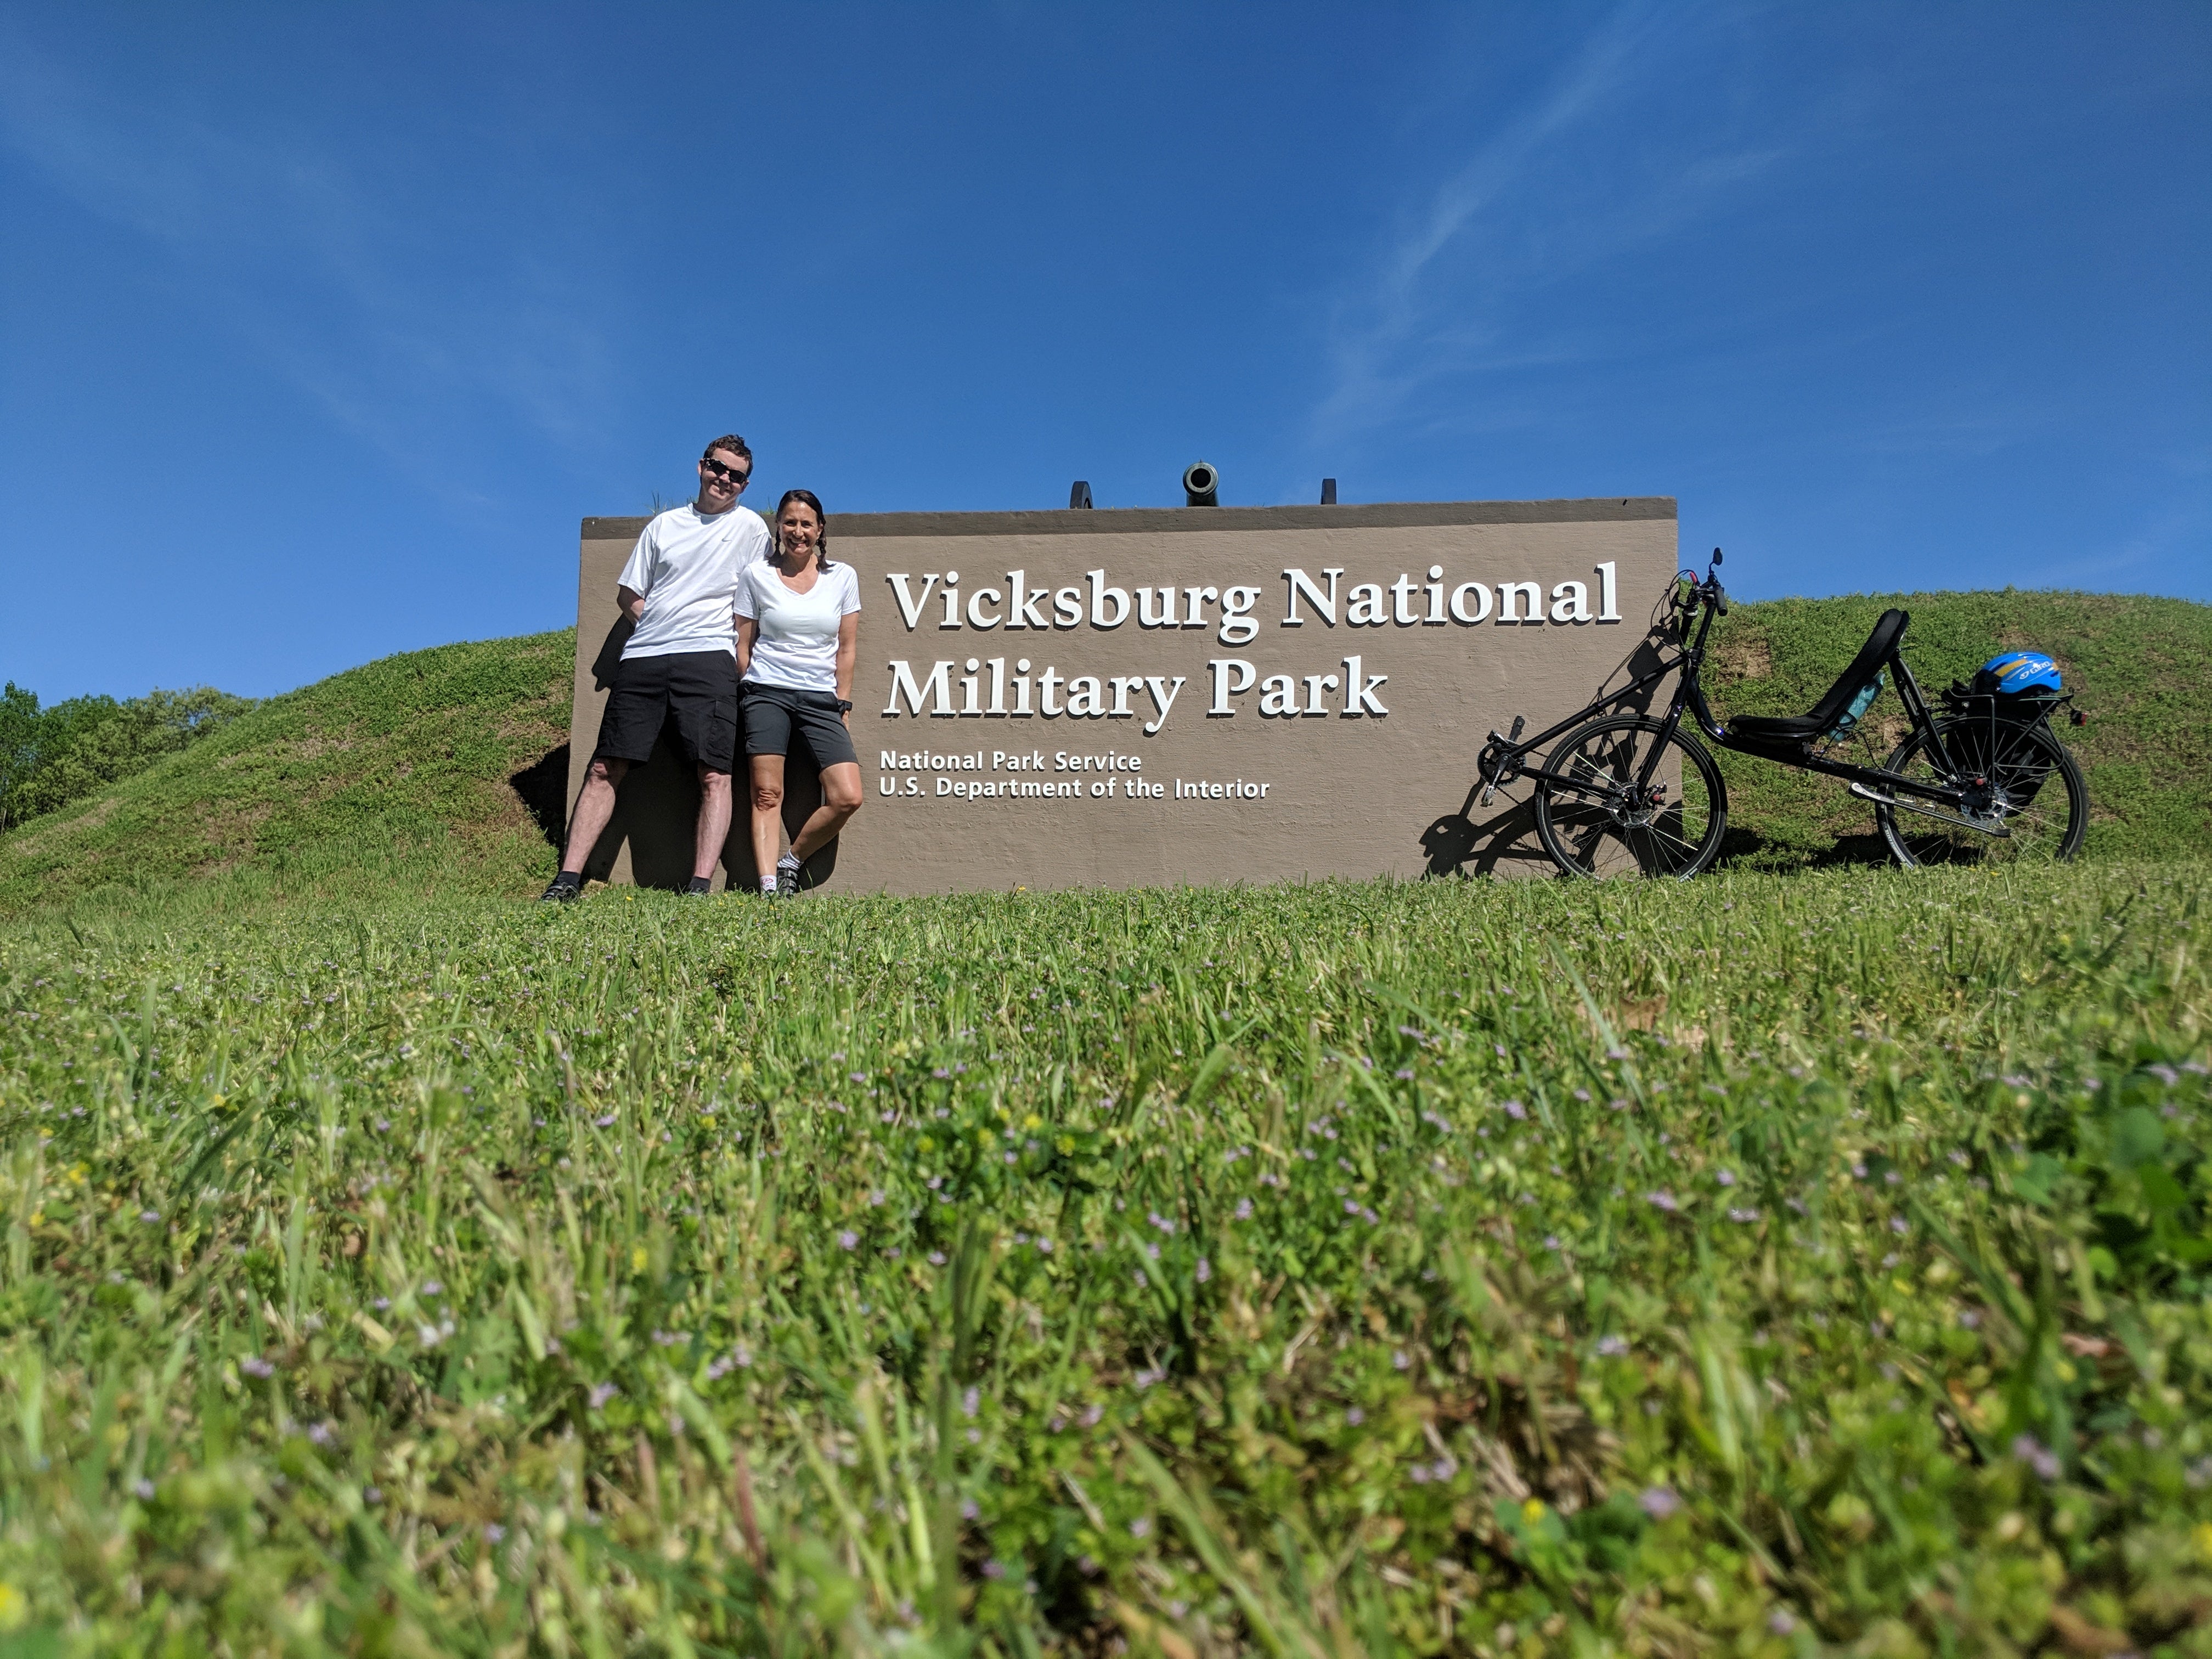 Vicksburg National Military Park entrance sign